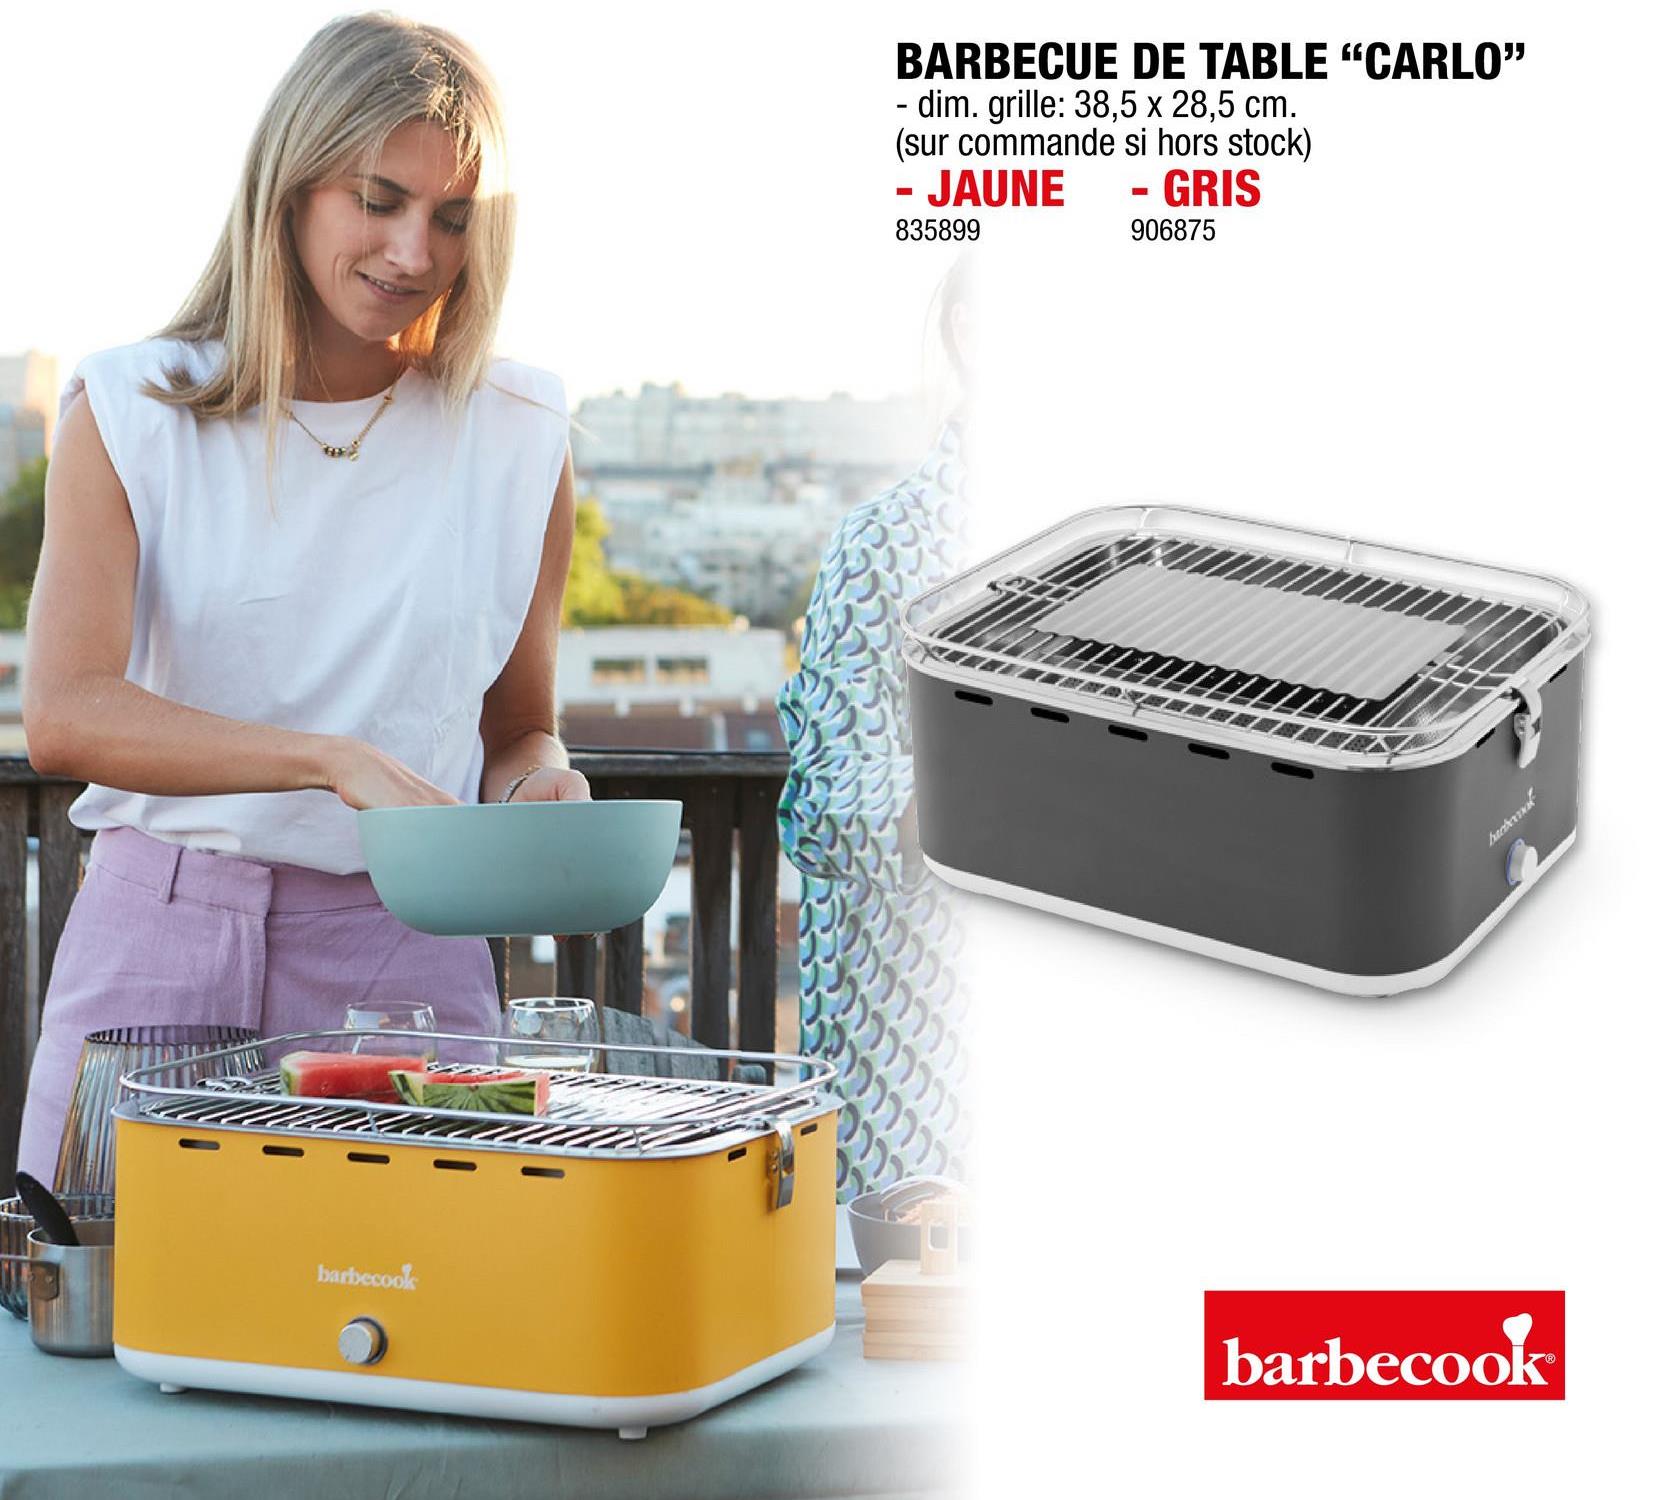 barbecook
BARBECUE DE TABLE "CARLO"
- dim. grille: 38,5 × 28,5 cm.
(sur commande si hors stock)
- JAUNE
835899
- GRIS
906875
בררררר
בהררת
hacherok
barbecook